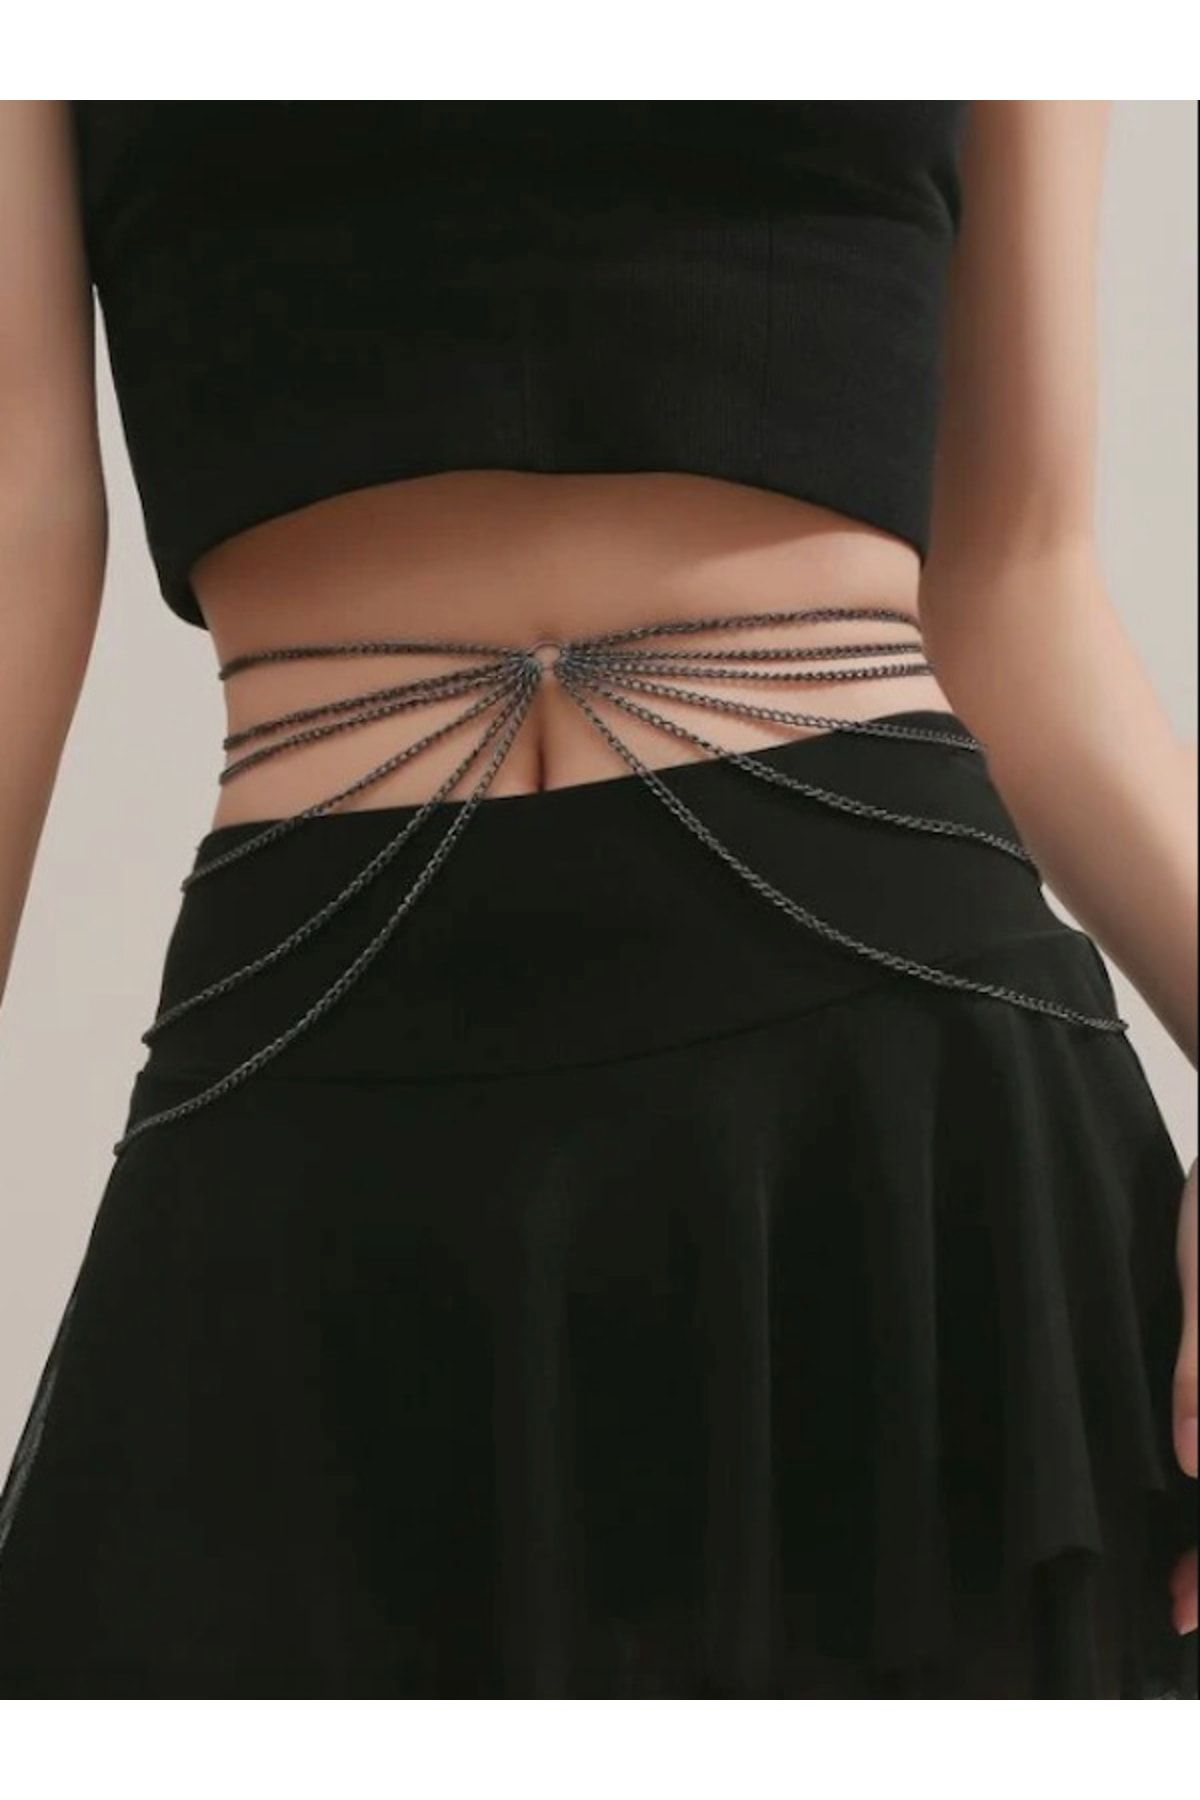 Qielle Bel Zinciri - Belly Chain Siyah Zincir Pantolon - Bikini Üstü Tasarım